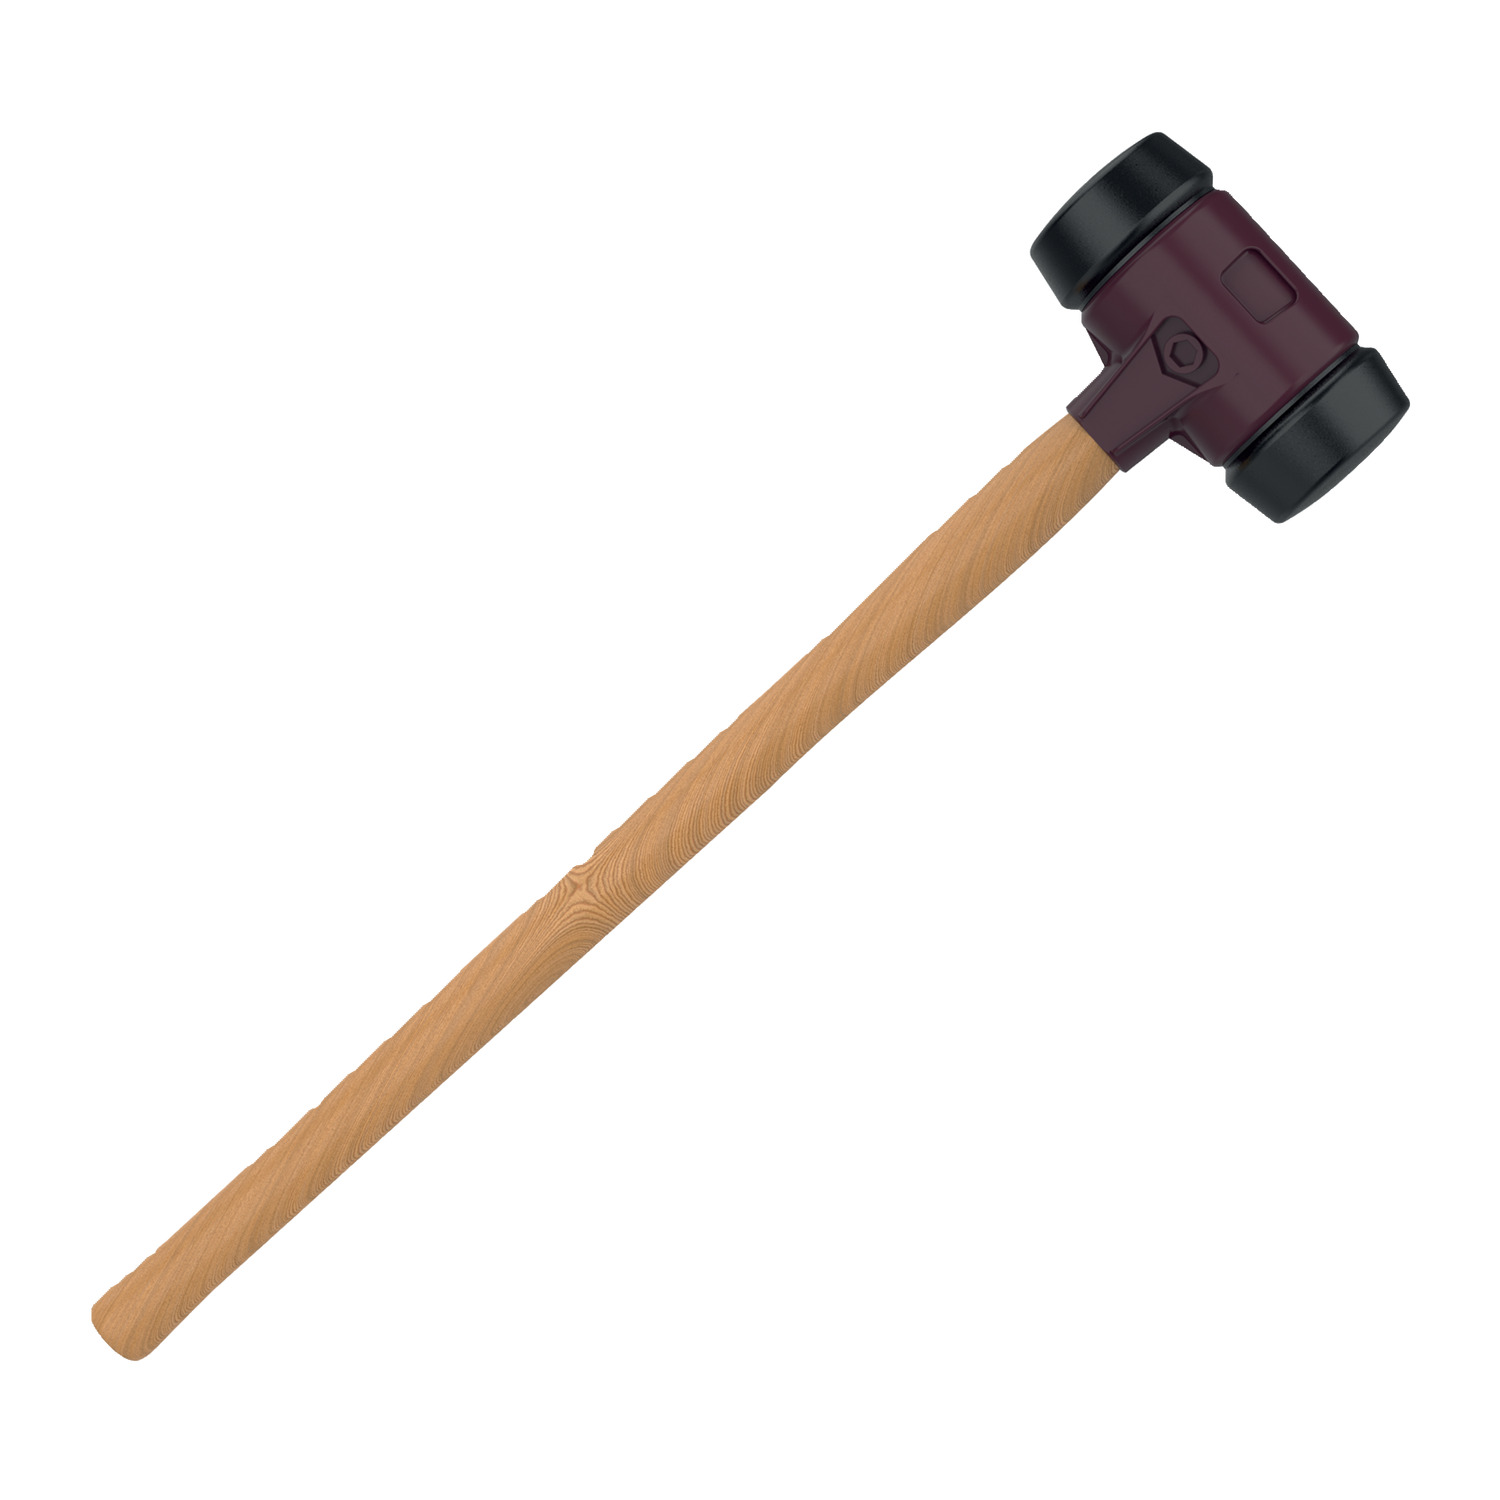 98201 Simplex Sledge Hammer - Complete